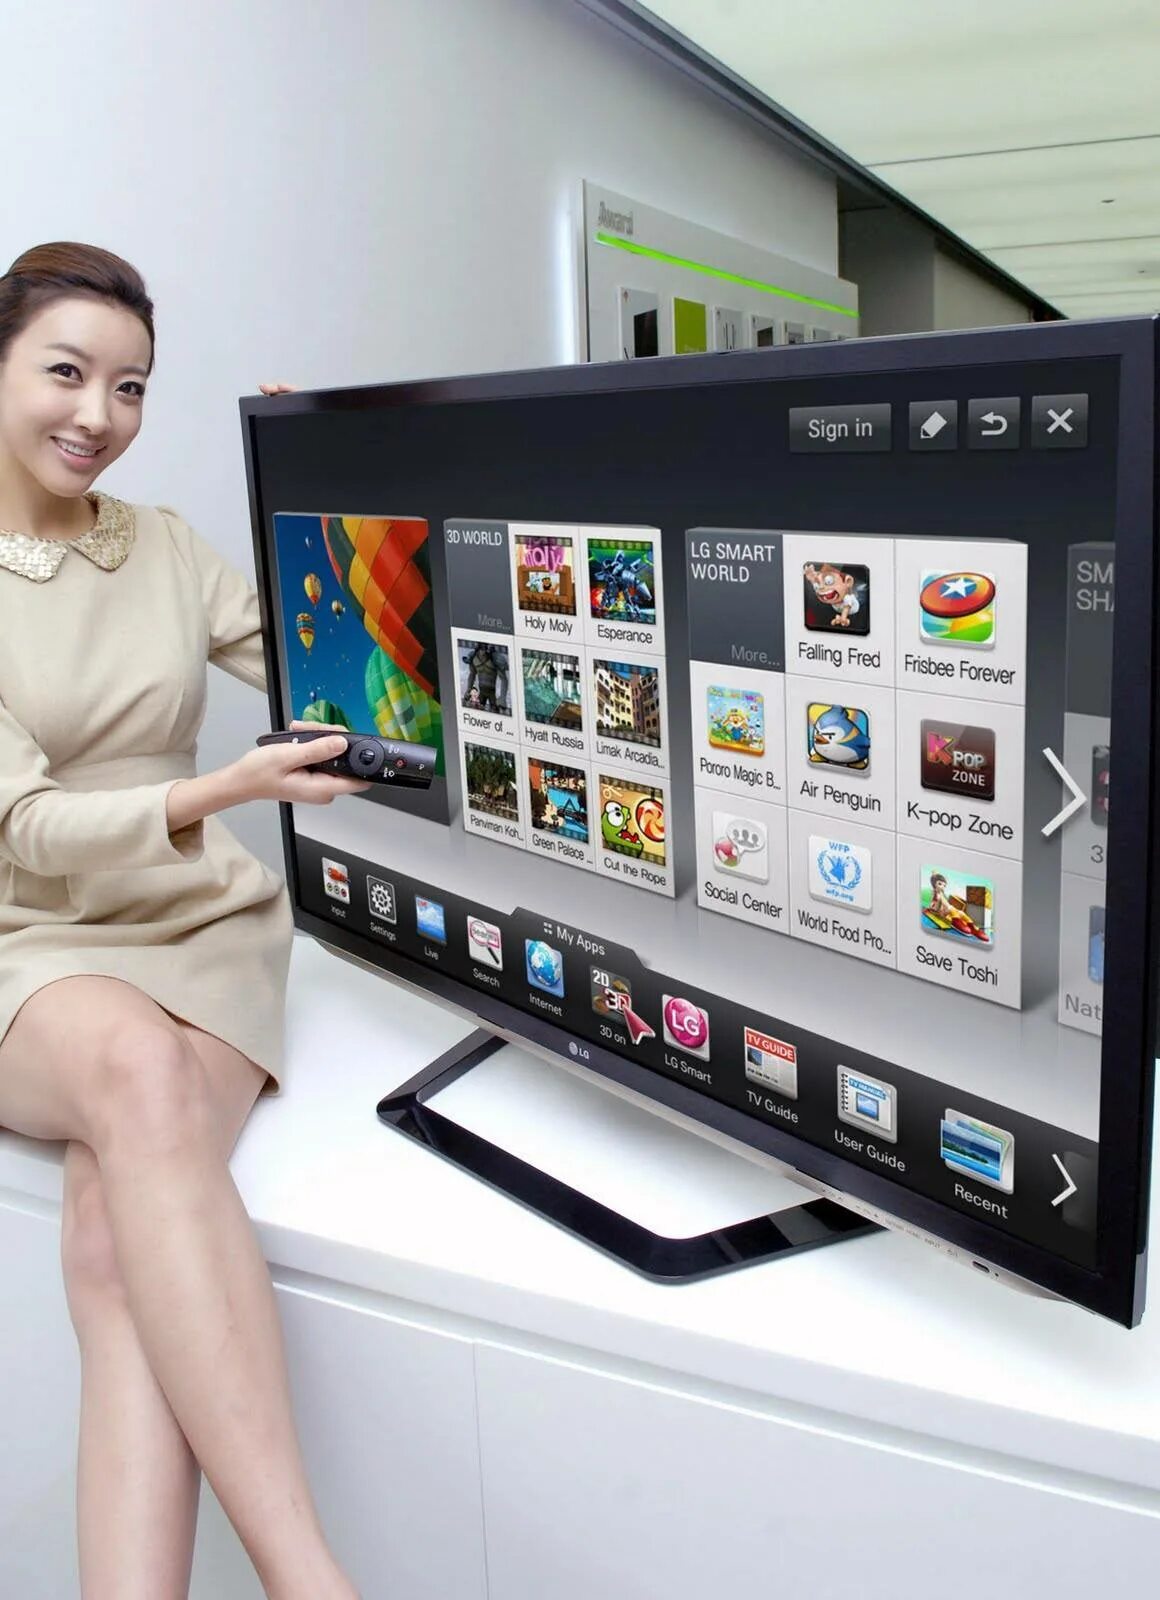 LG Smart TV 2012. LG Smart TV 2012 3d. Телевизор LG 3d Smart TV. LG телевизор смарт 2012. Какой телевизор со смарт тв лучший